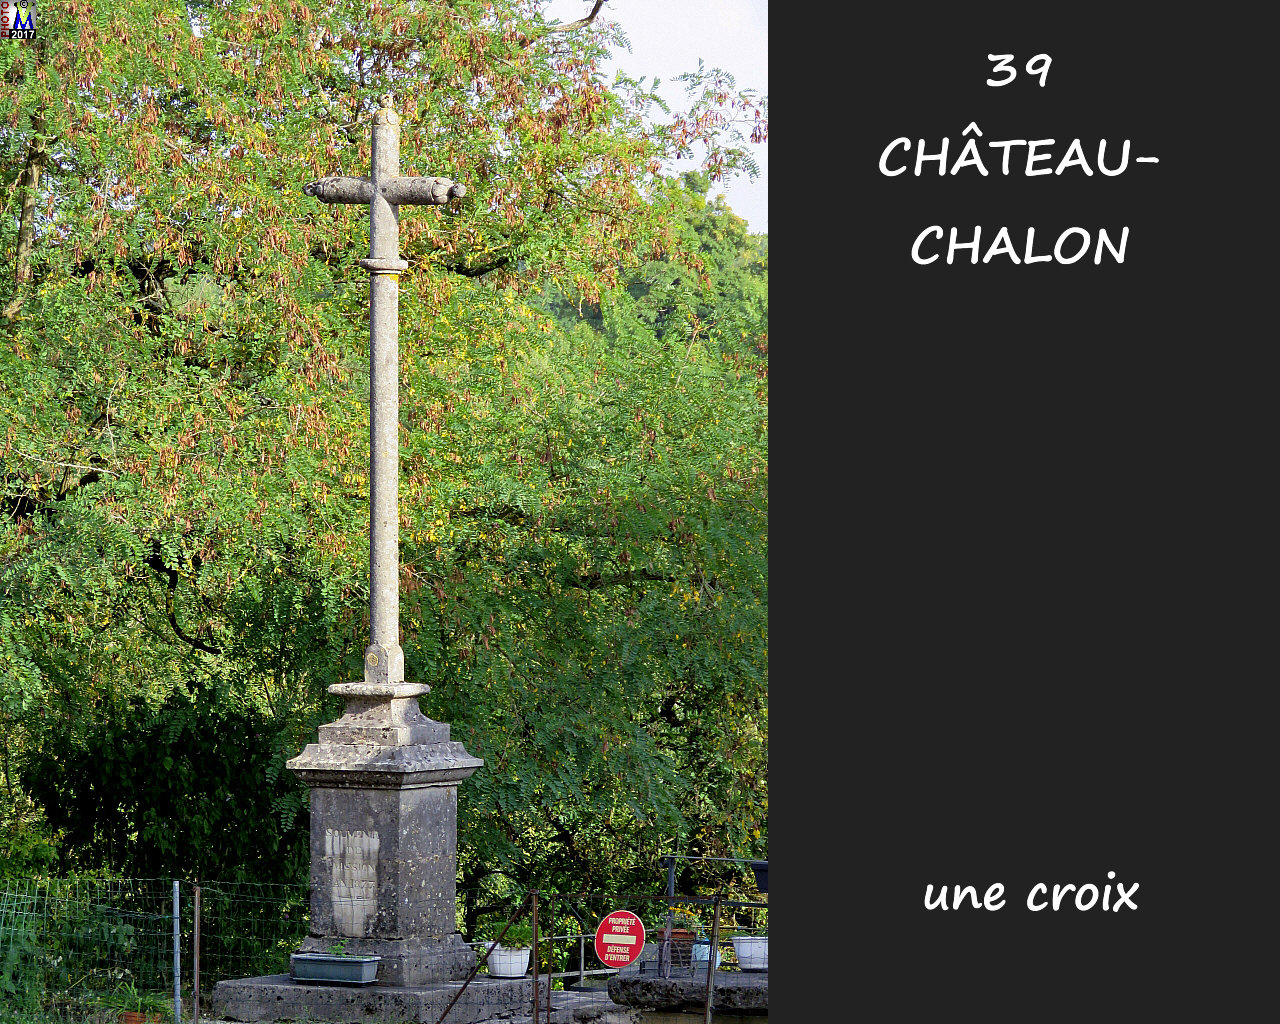 39CHATEAU-CHALON_croix_100.jpg